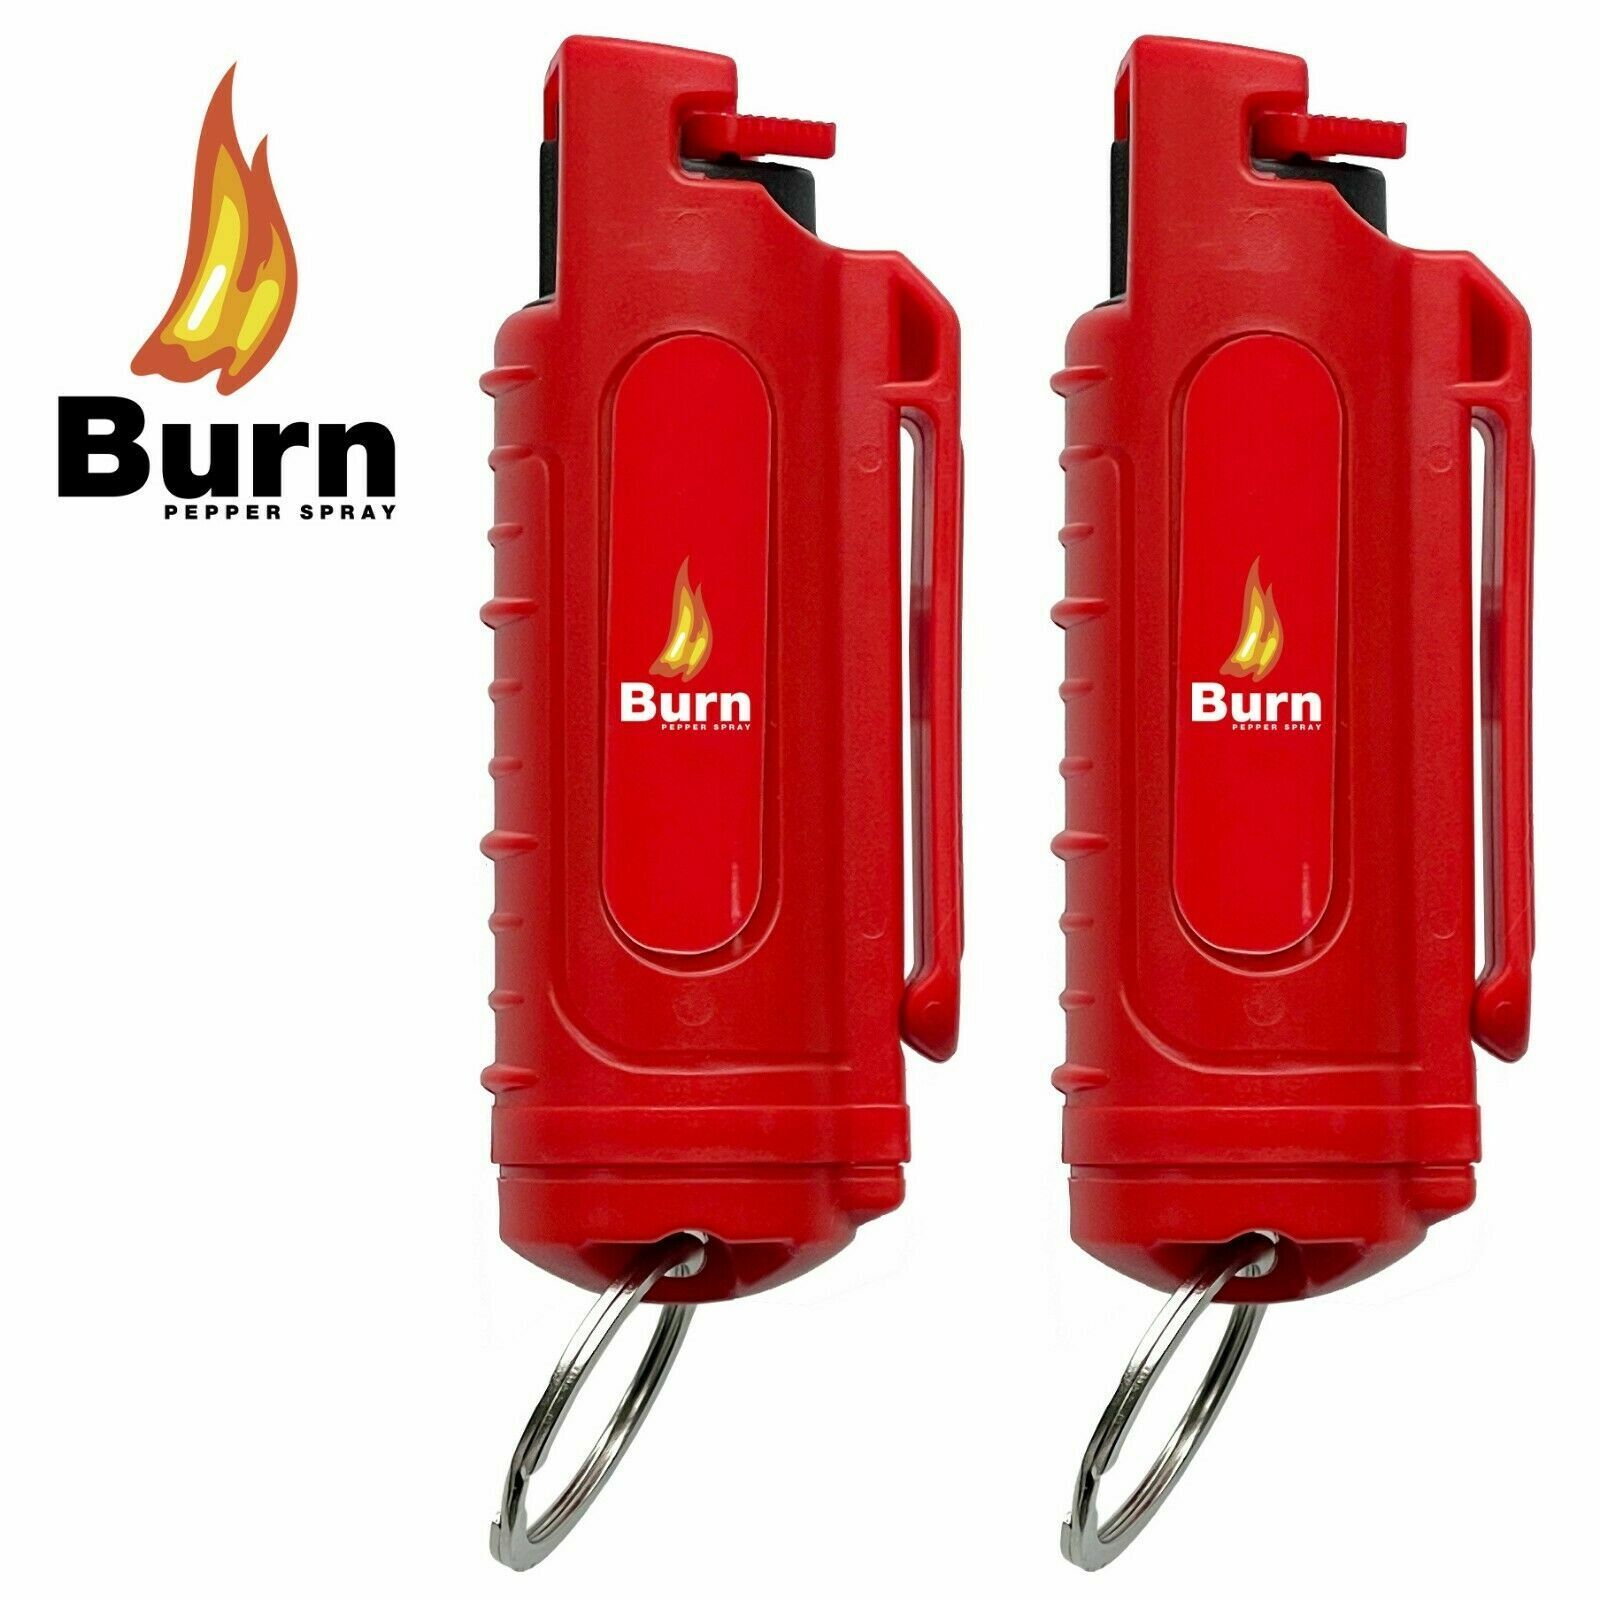 BURN Pepper Spray .50oz Keychain Self Defense Security Case Molded Red - 2 PACK  Burn